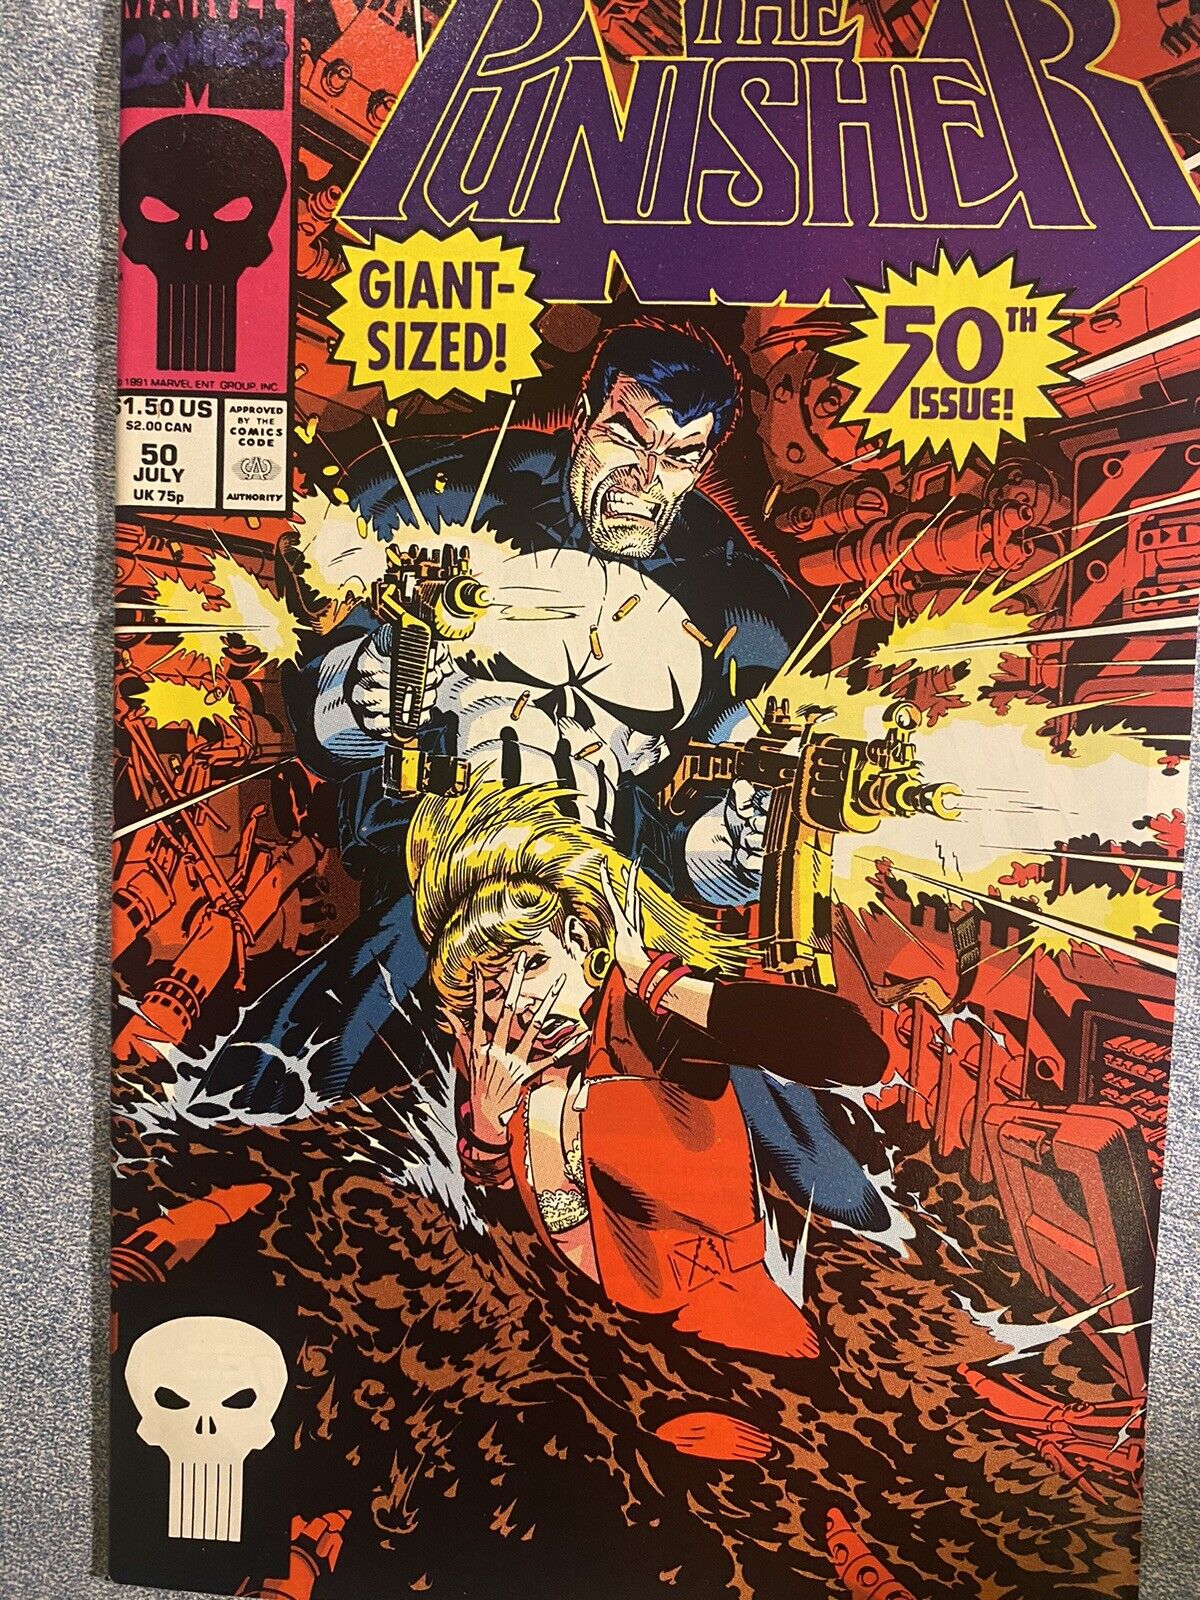 The Punisher #50 (Marvel Comics October 1991)